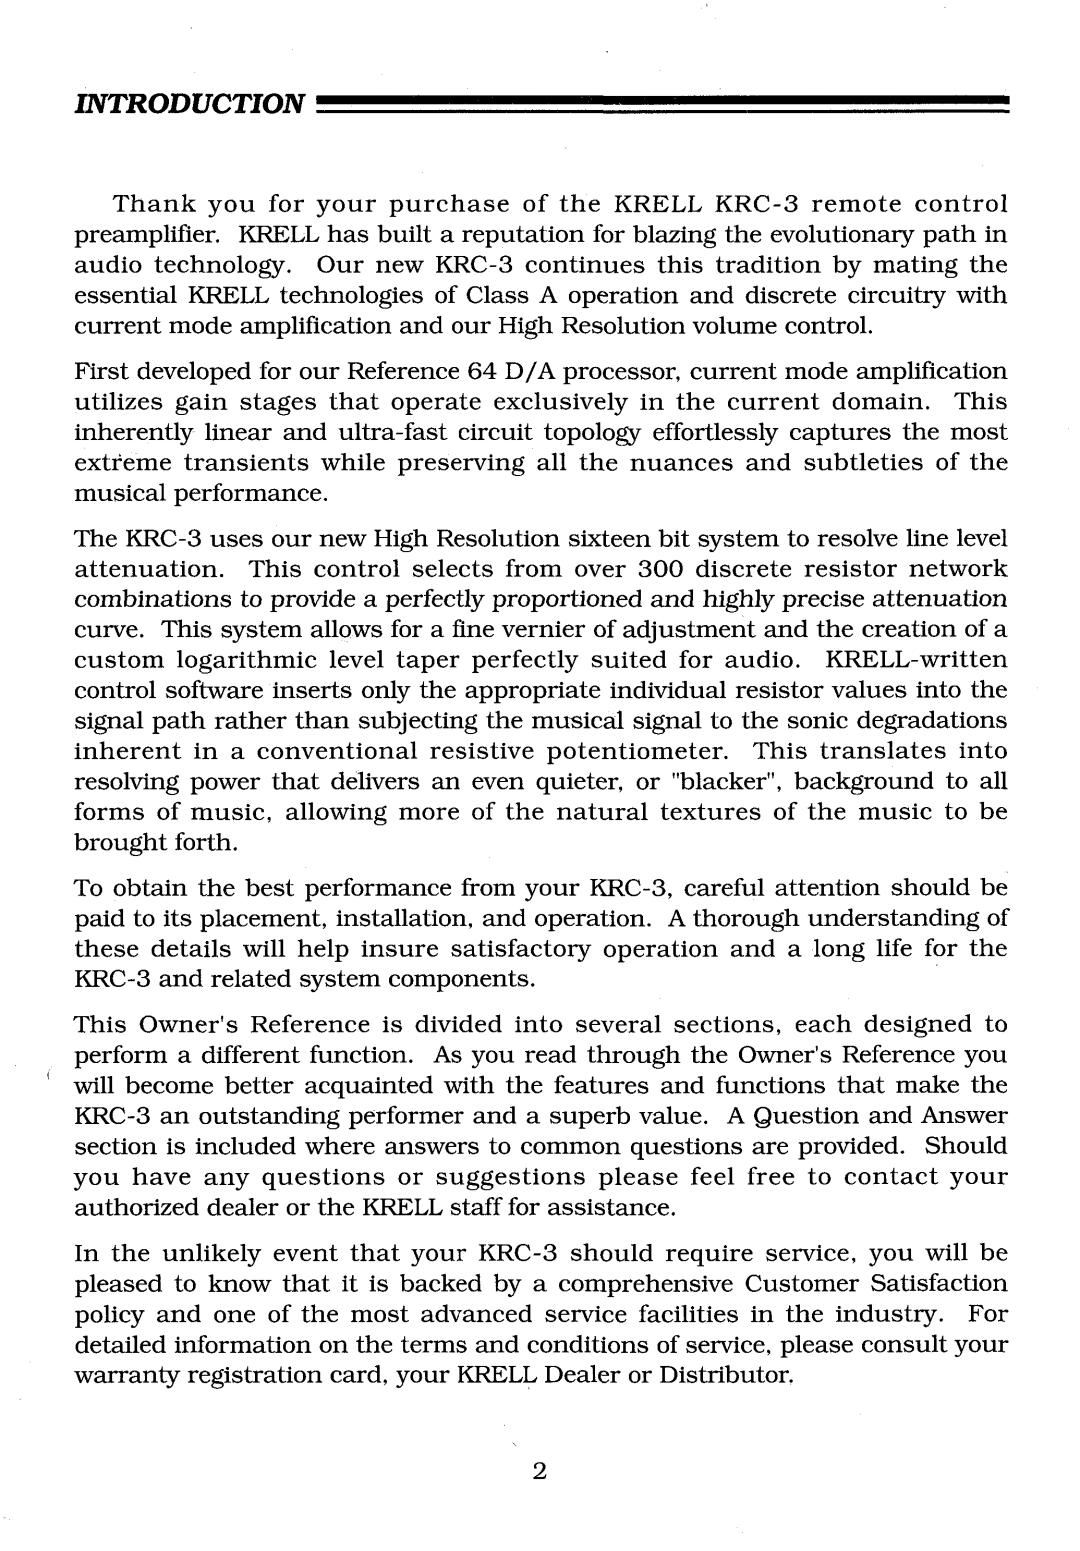 Krell Industries KRC-3 manual Introduction 